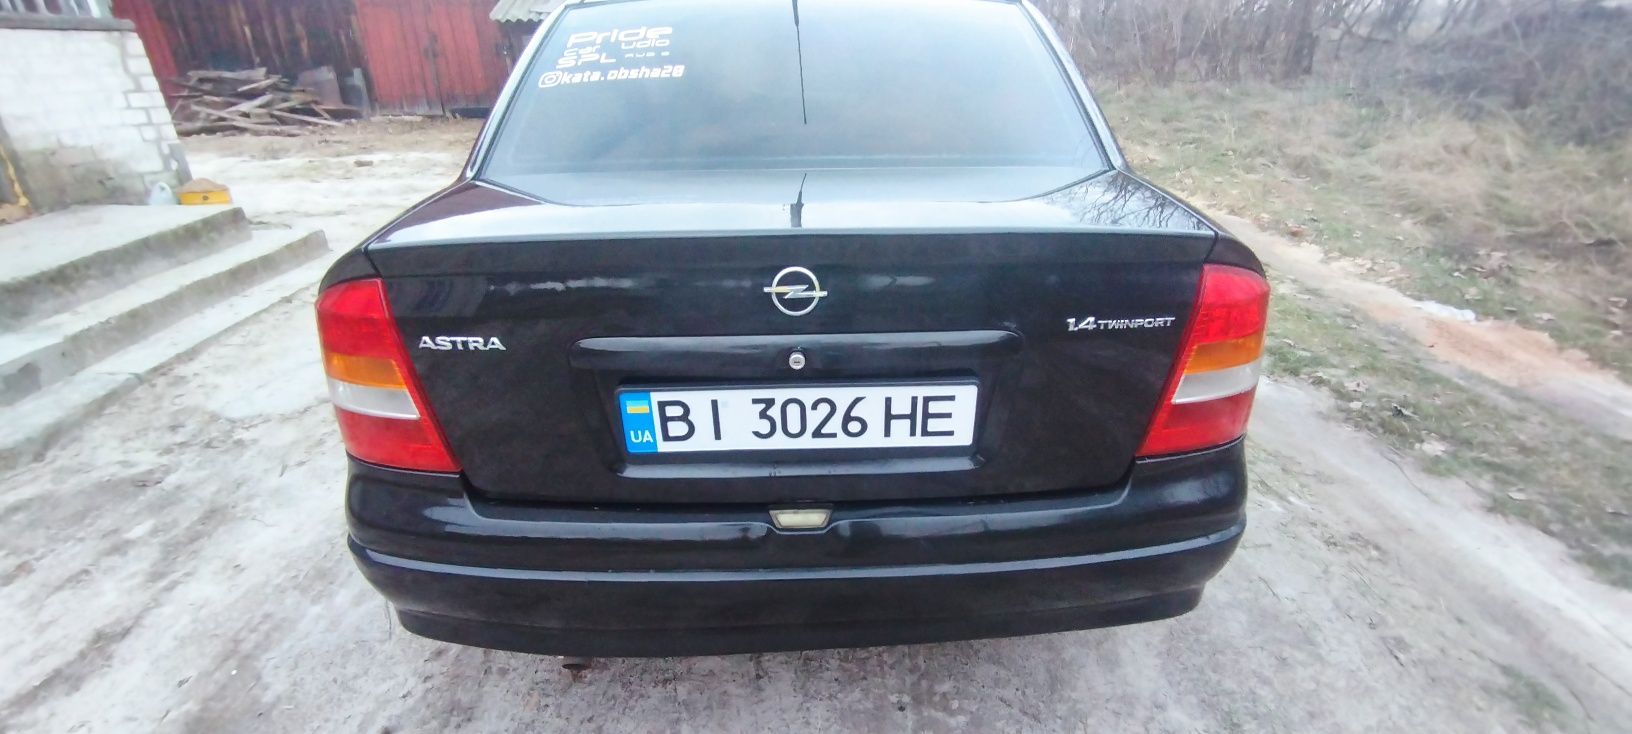 Opel Astra g ,2008 рік ,1.4 .